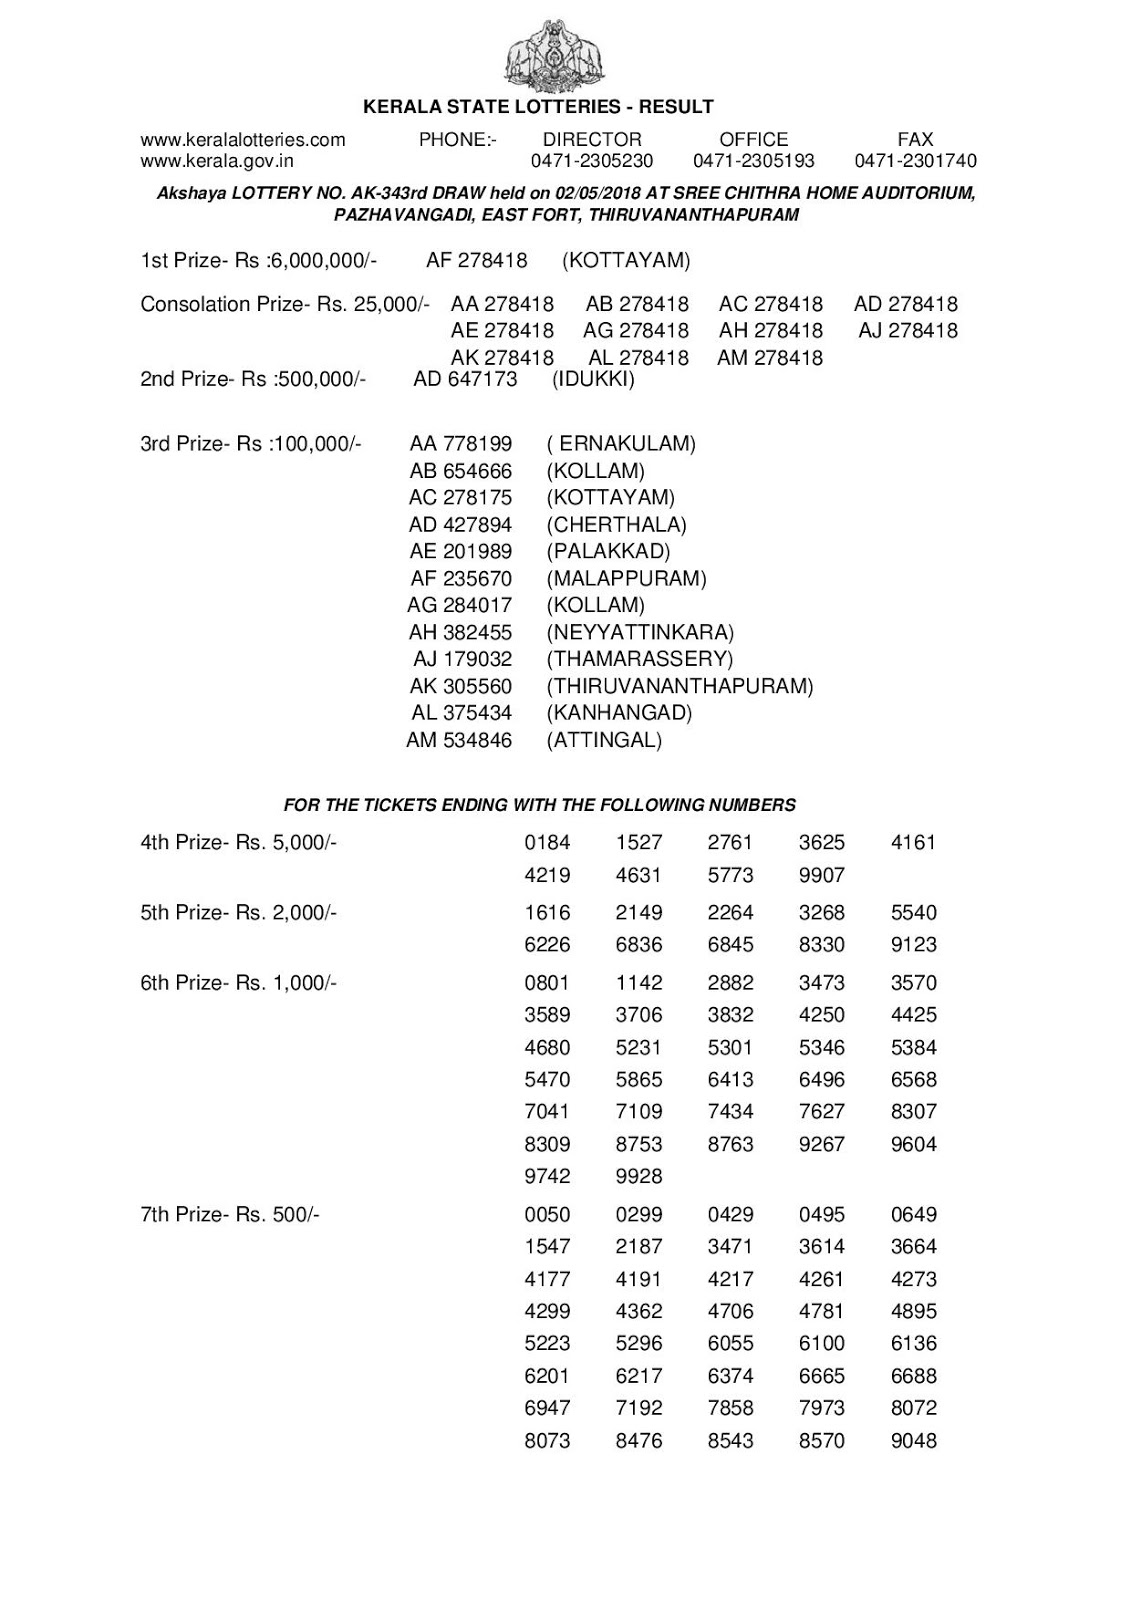 Kerala Lottery Results Today 02.05.2018 Akshaya AK-343 Lottery Results Official PDF